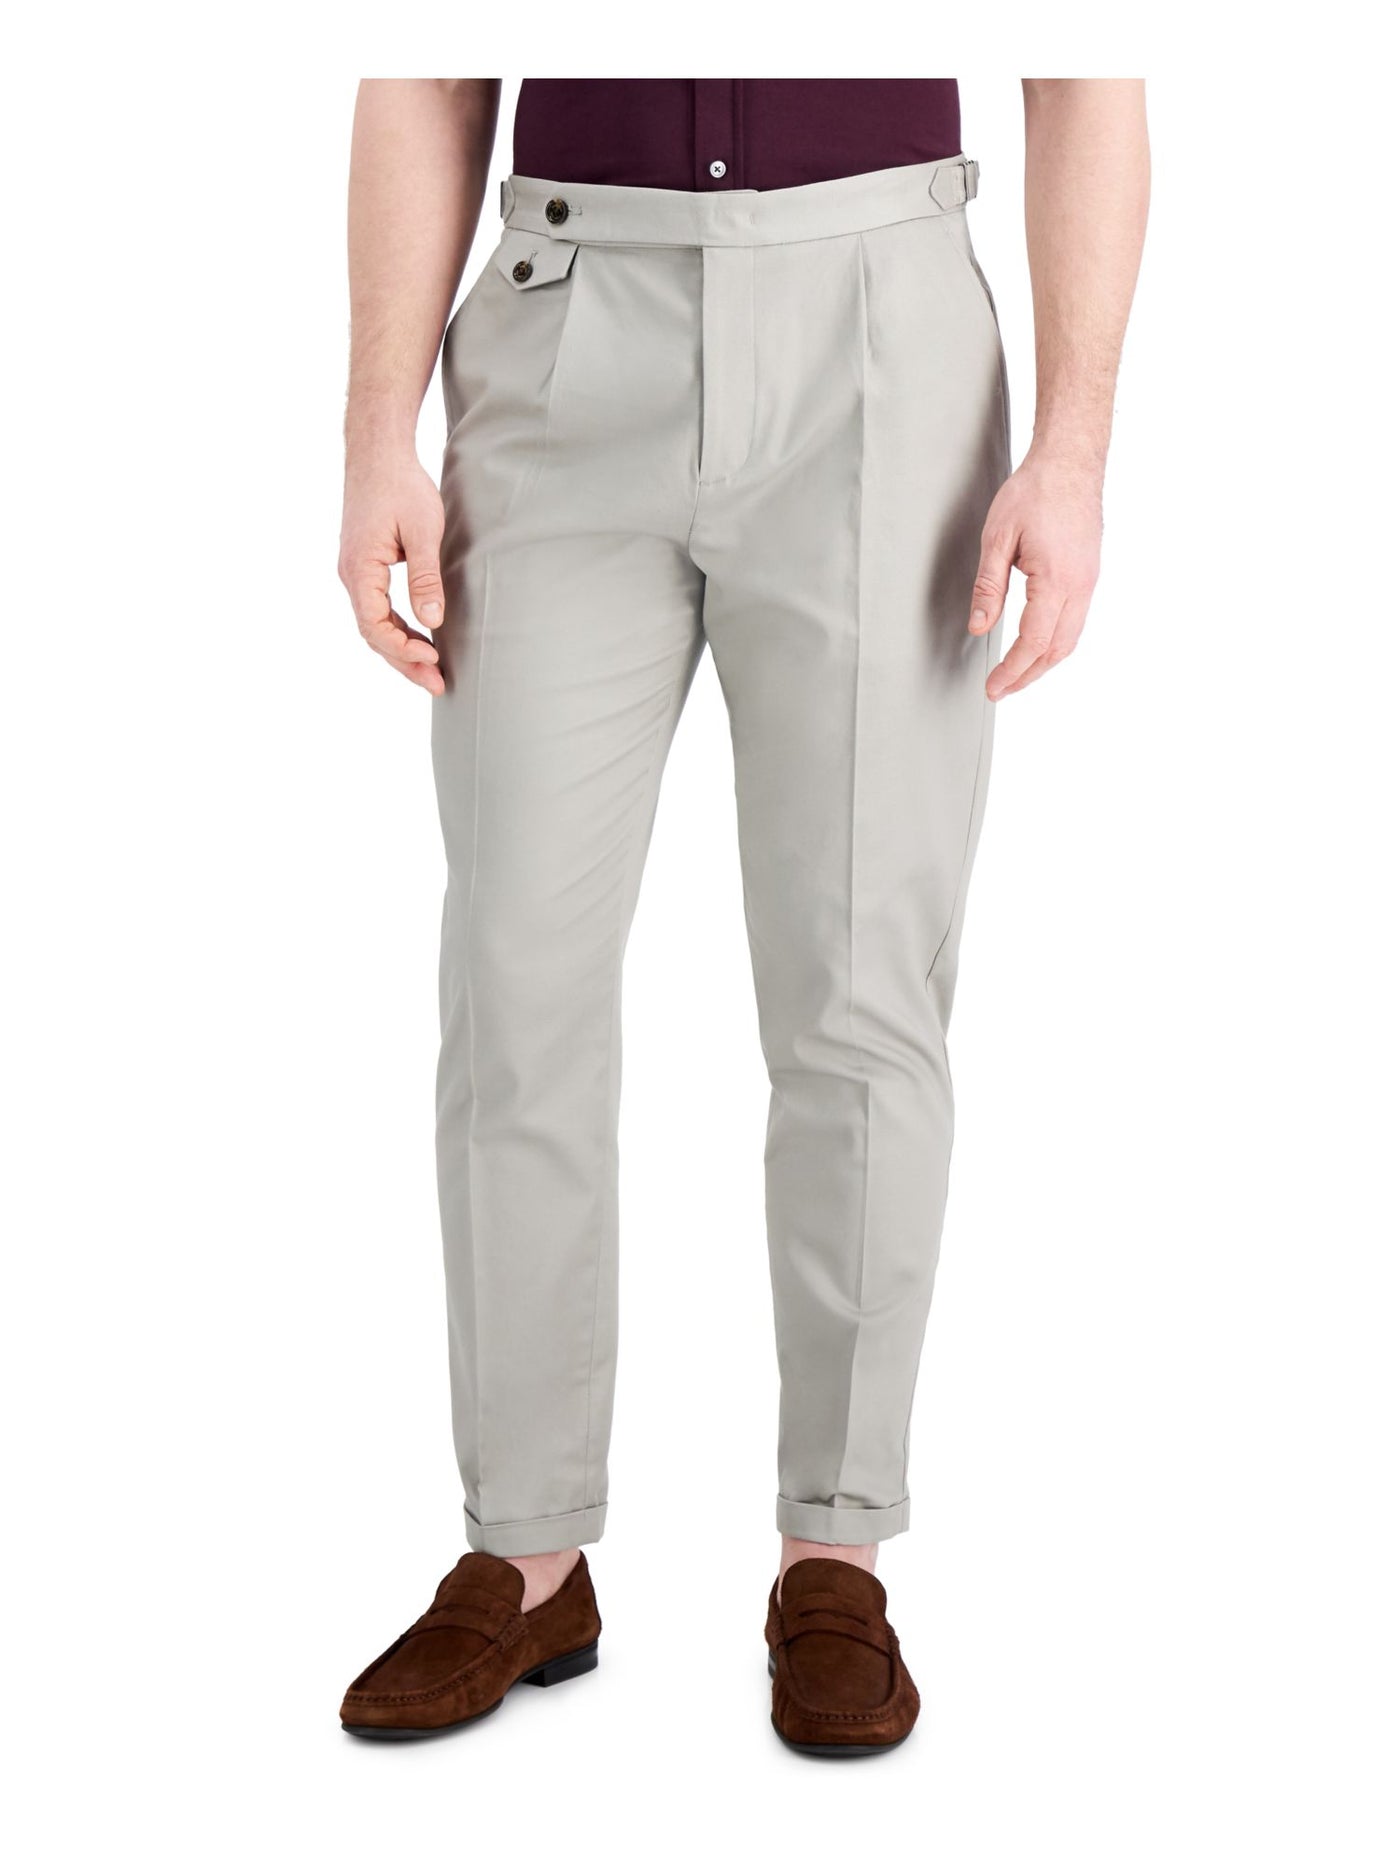 TASSO ELBA Mens Fashion Gray Pleated Tapered Classic Fit Stretch Pants 34W/ 30L